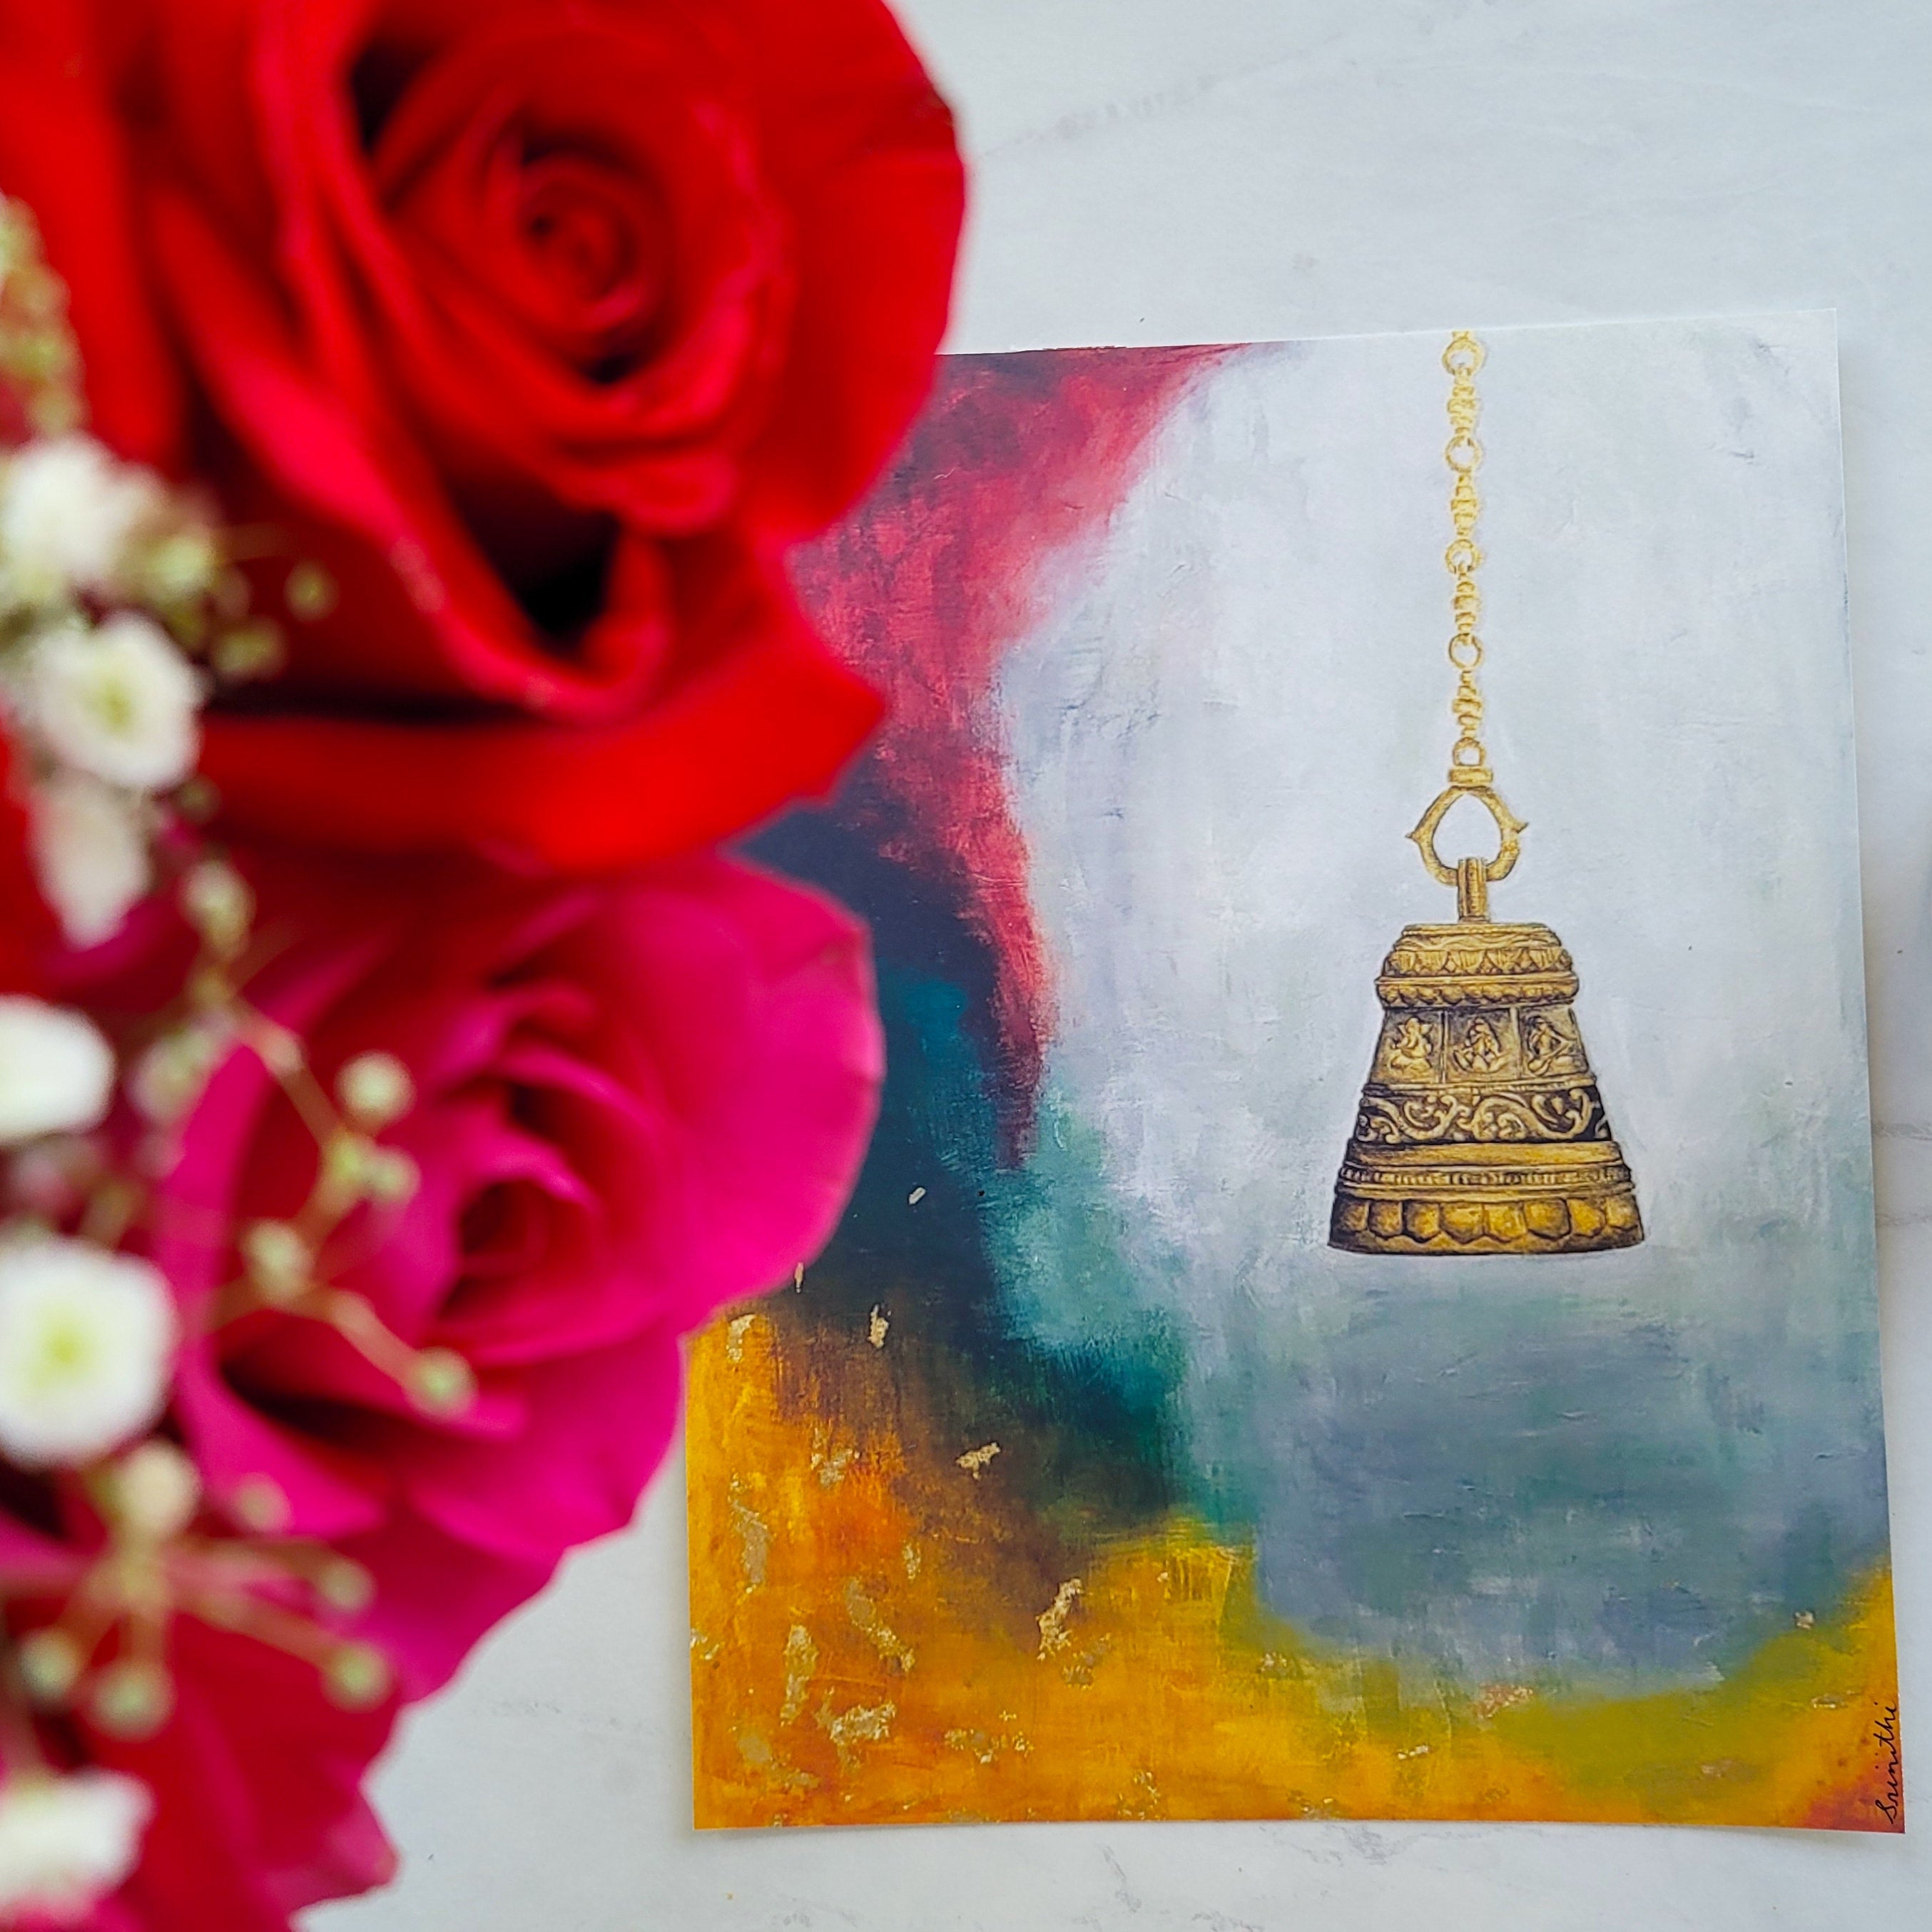 Prayer Bell Print by Sri's Arts